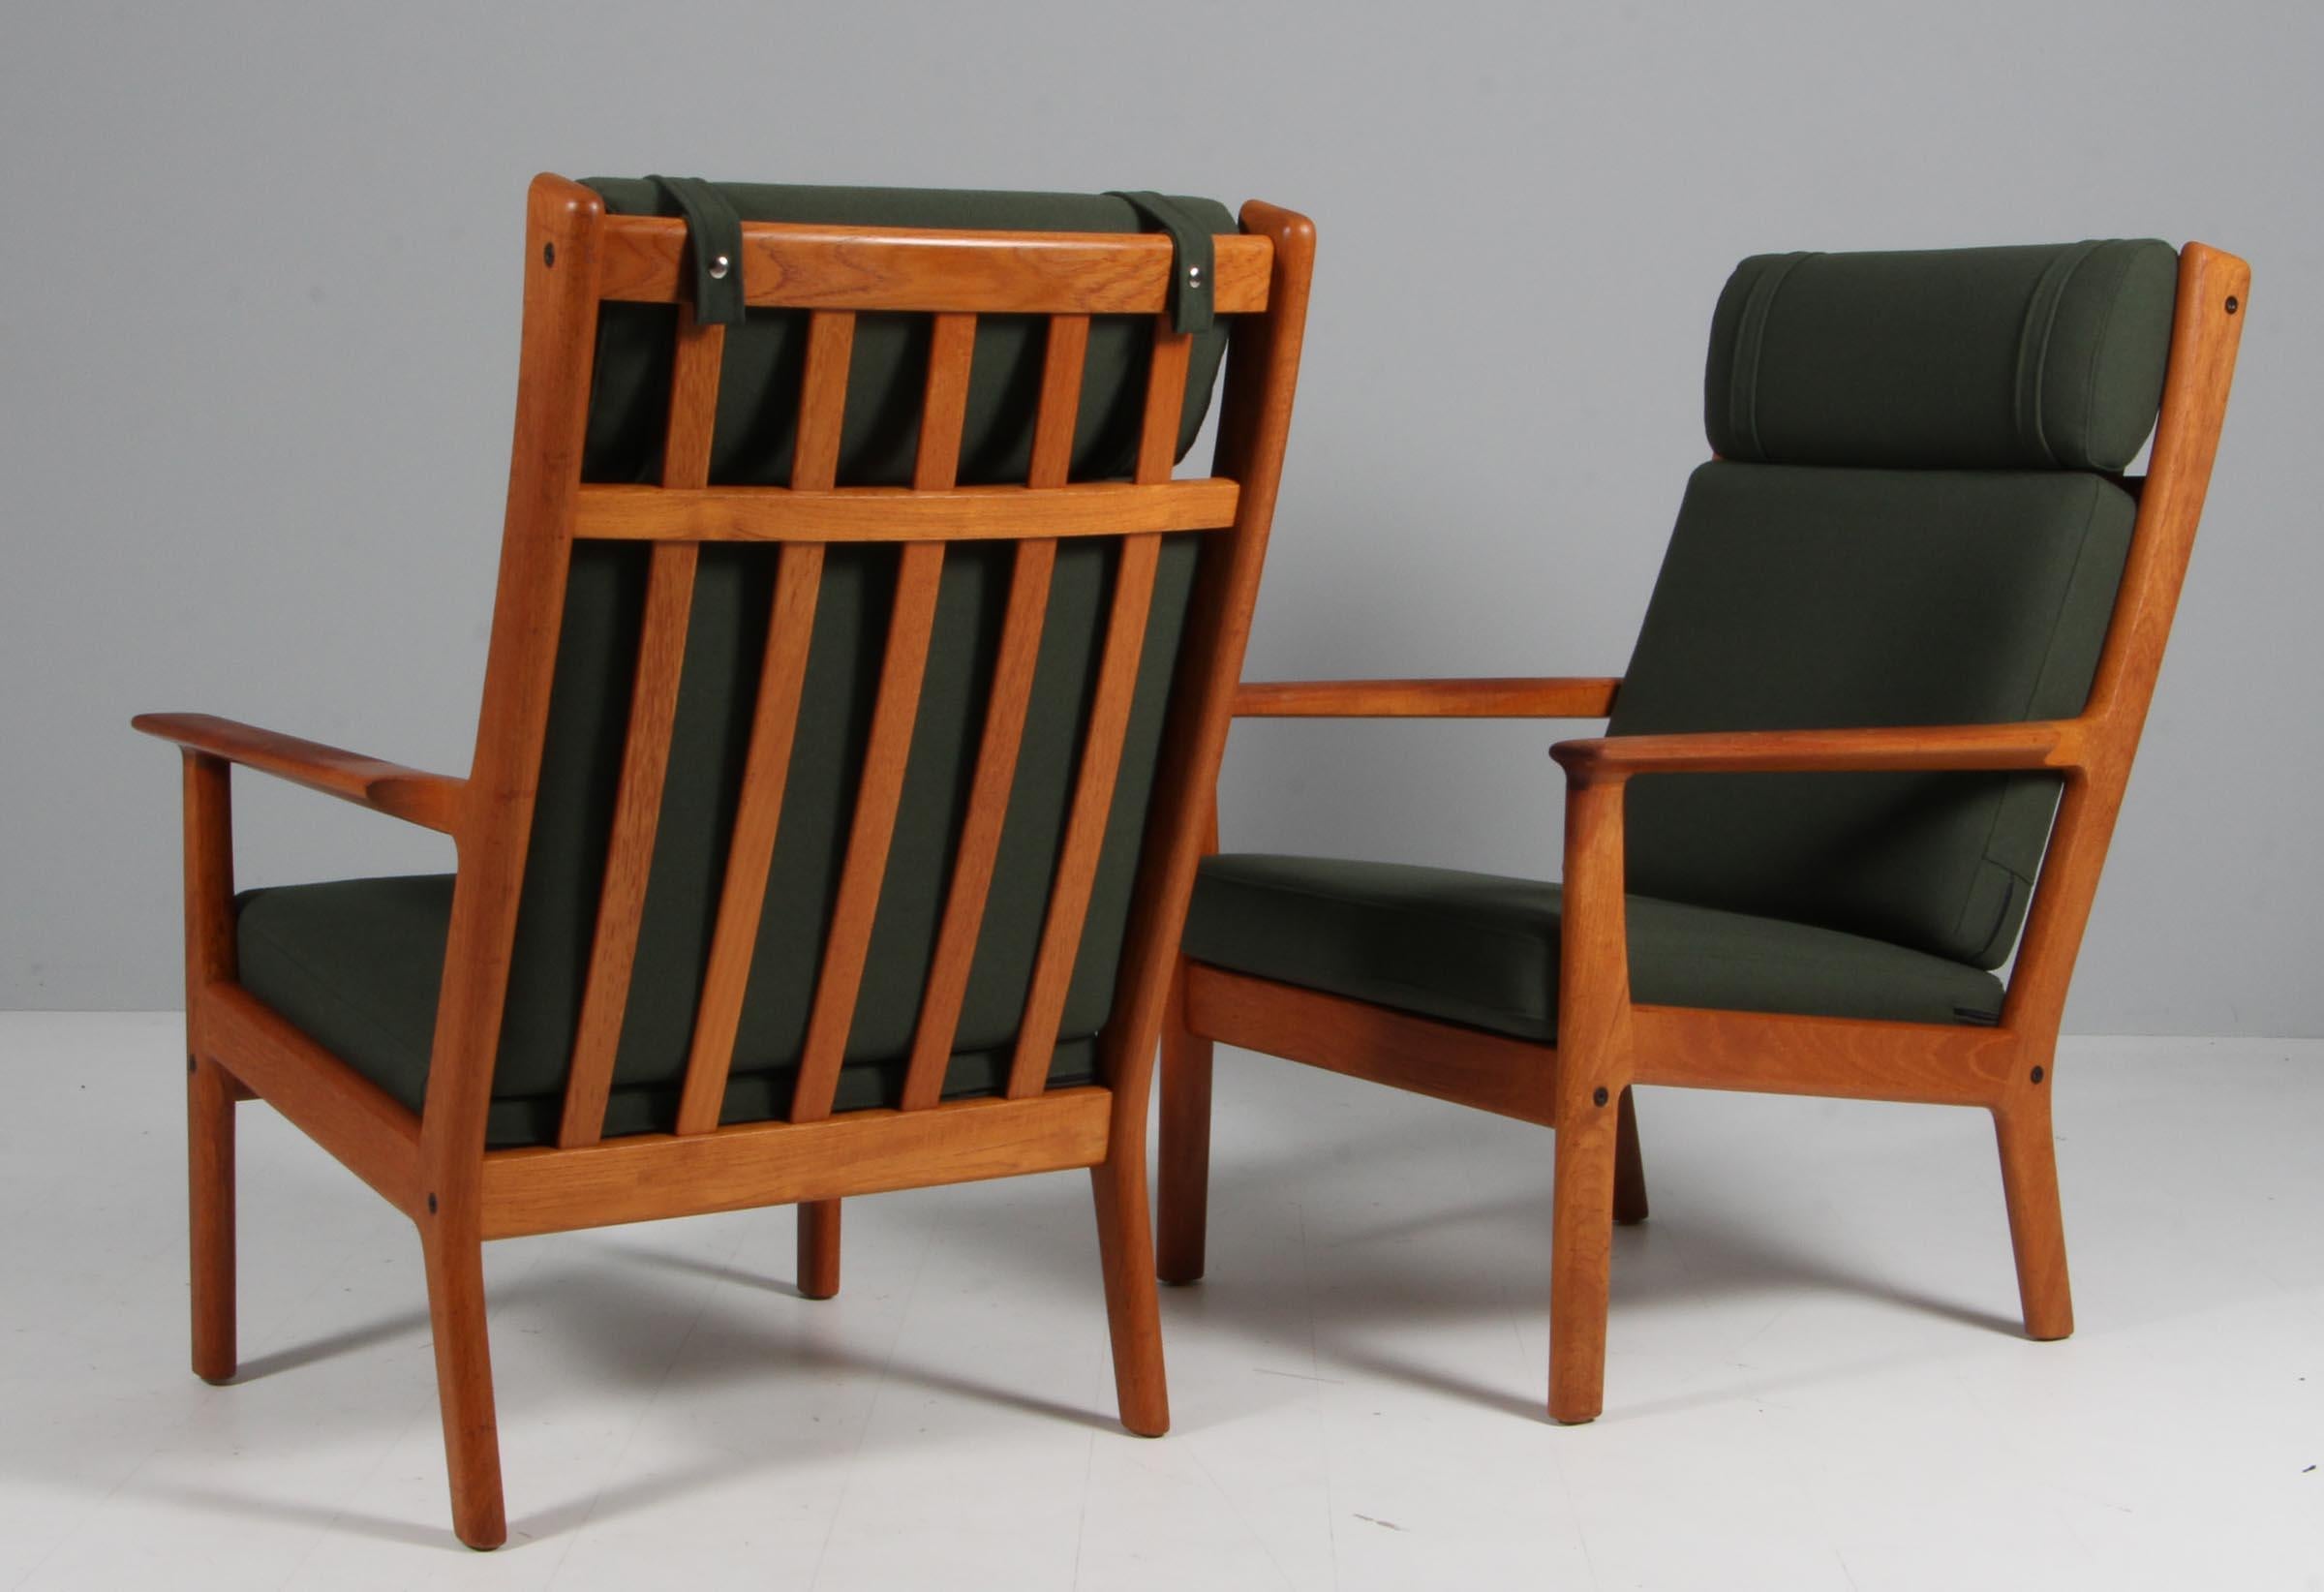 Late 20th Century Hans J. Wegner highback lounge chair in teak and Hallingdal. 1970s model GE265